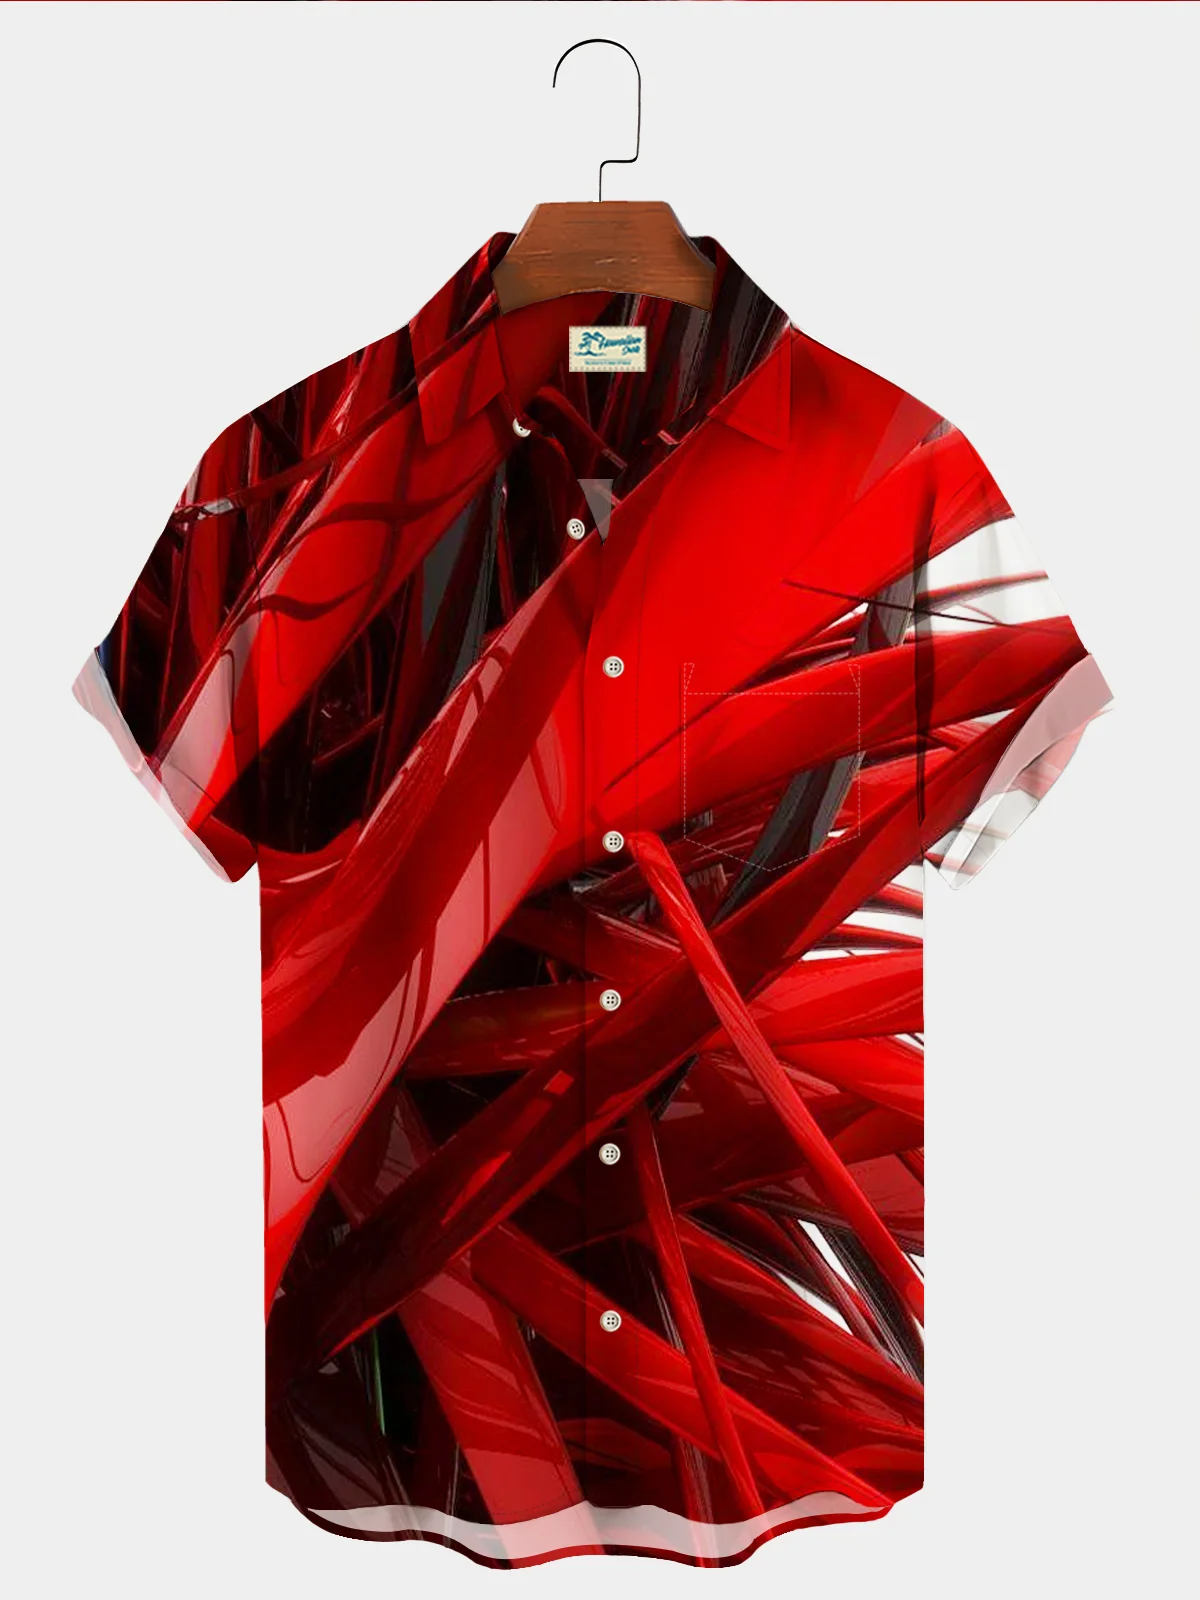 Royaura Red Art Gradient Geometric Space Print Chest Bag Shirt Plus Red Shirt